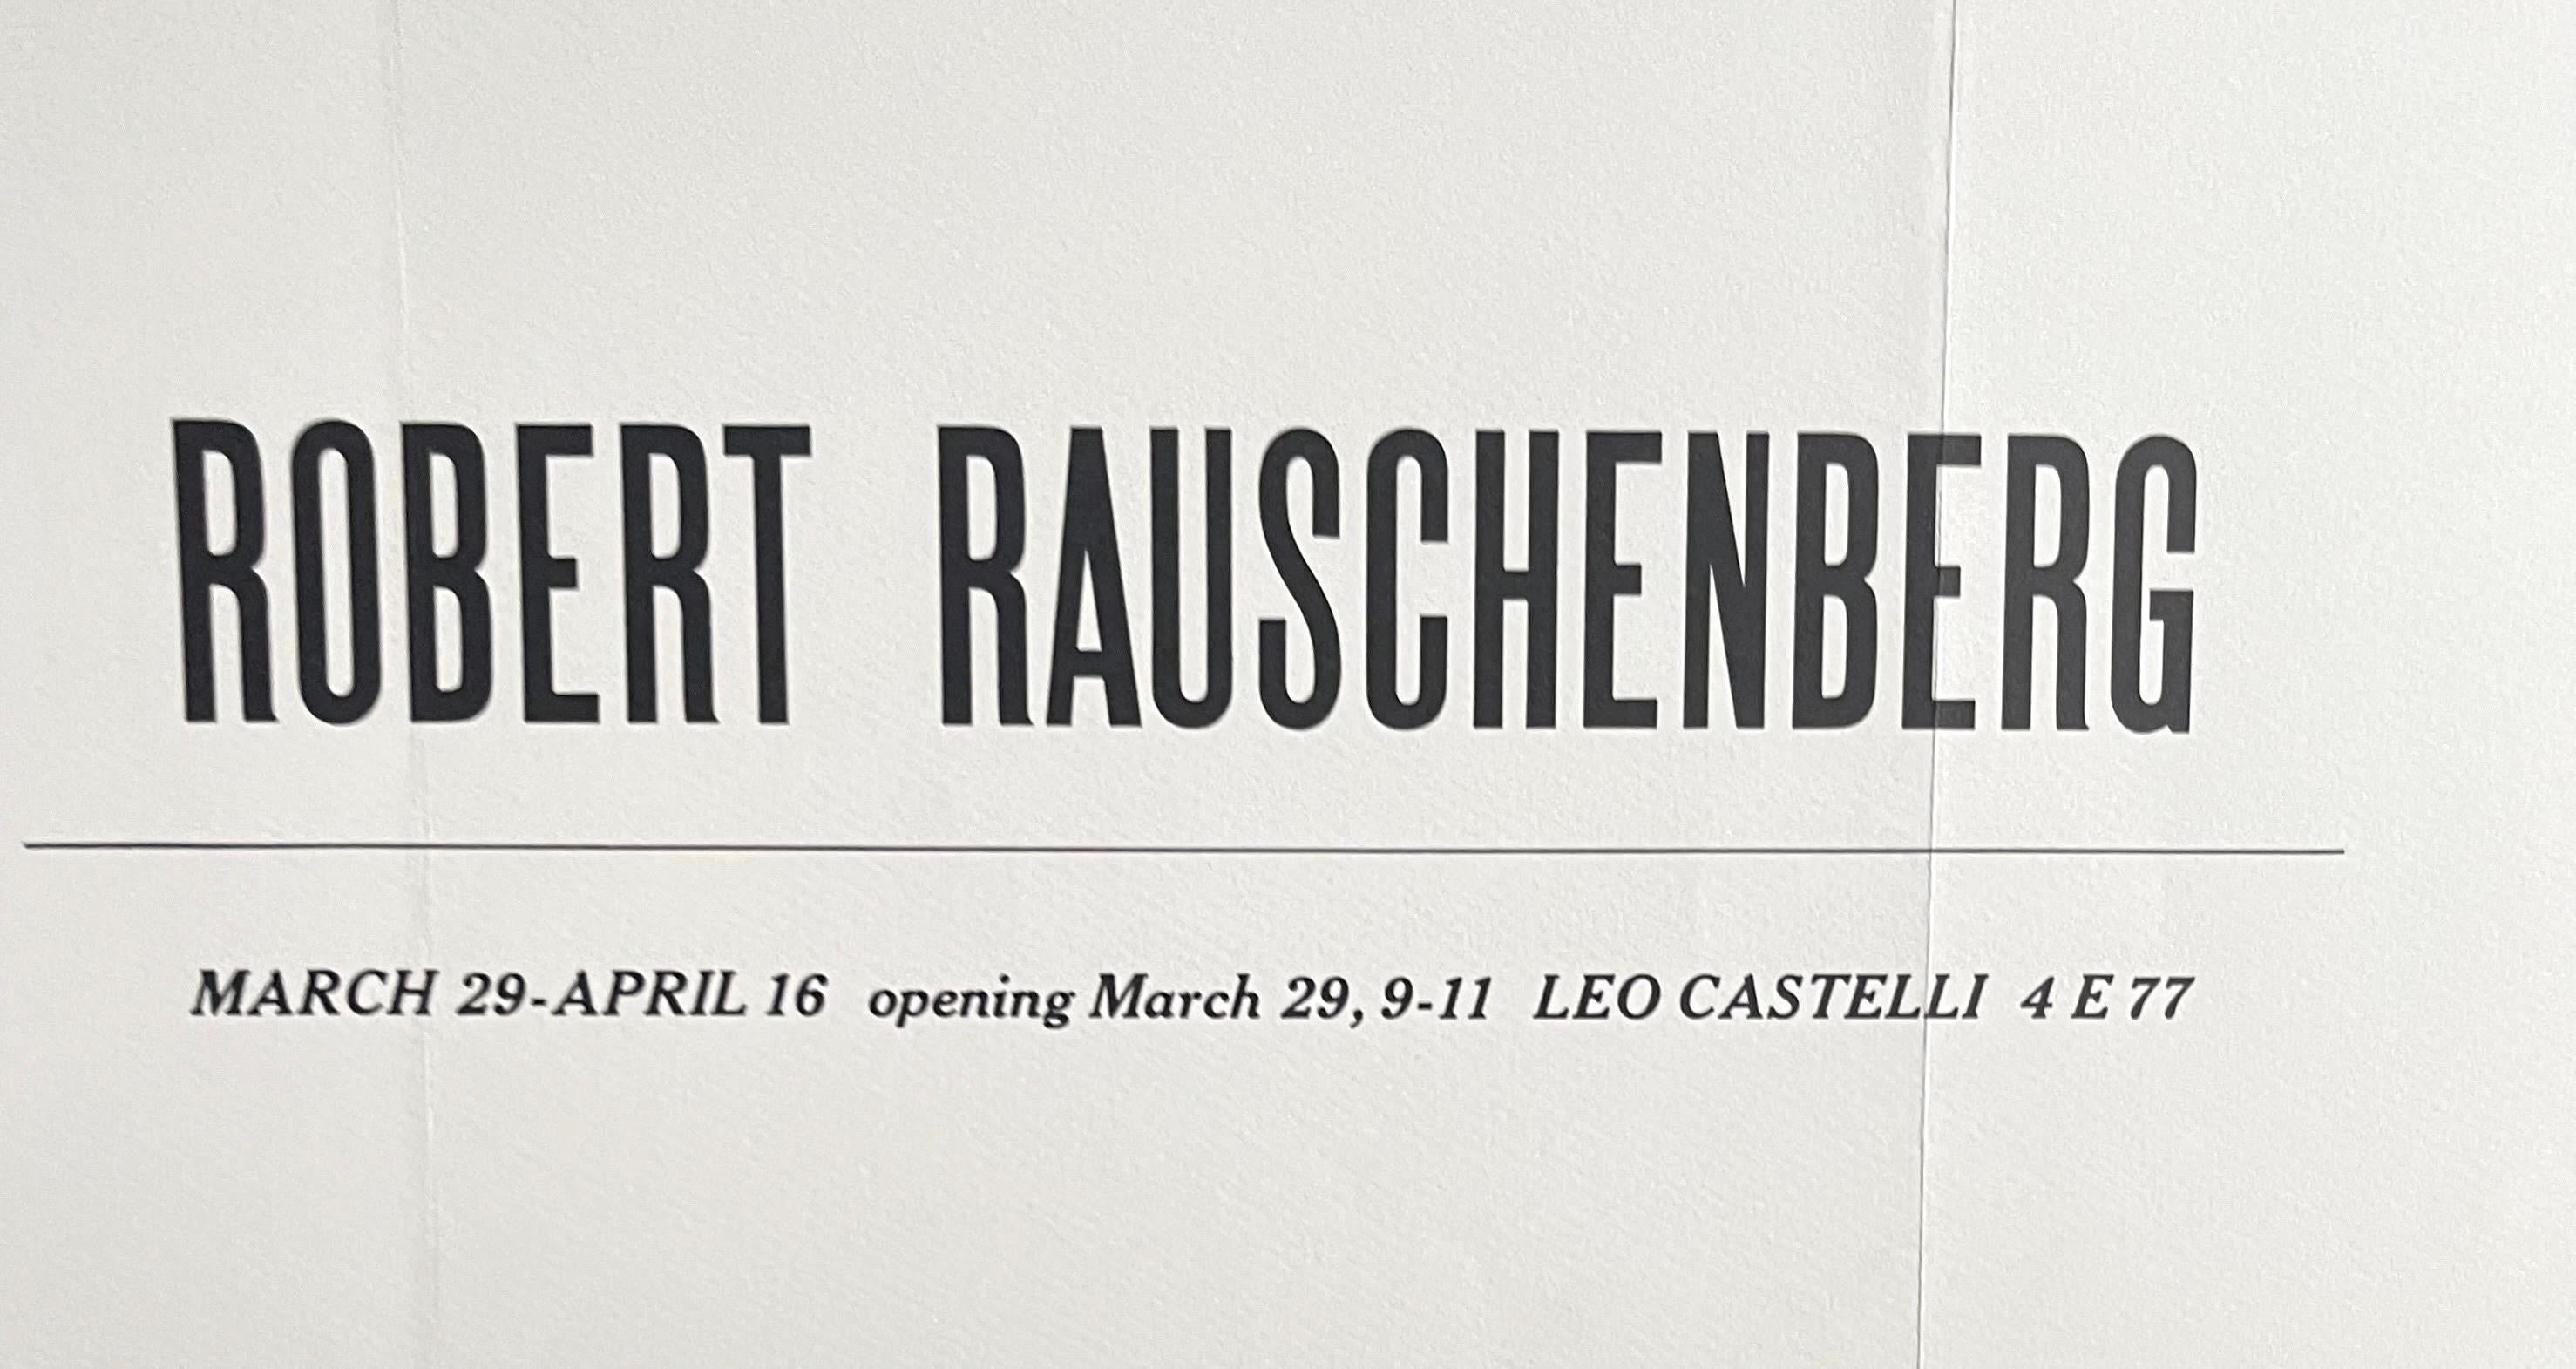 Robert Rauschenberg at Leo Castelli poster (postmarked to artist Ludwig Sander) For Sale 1